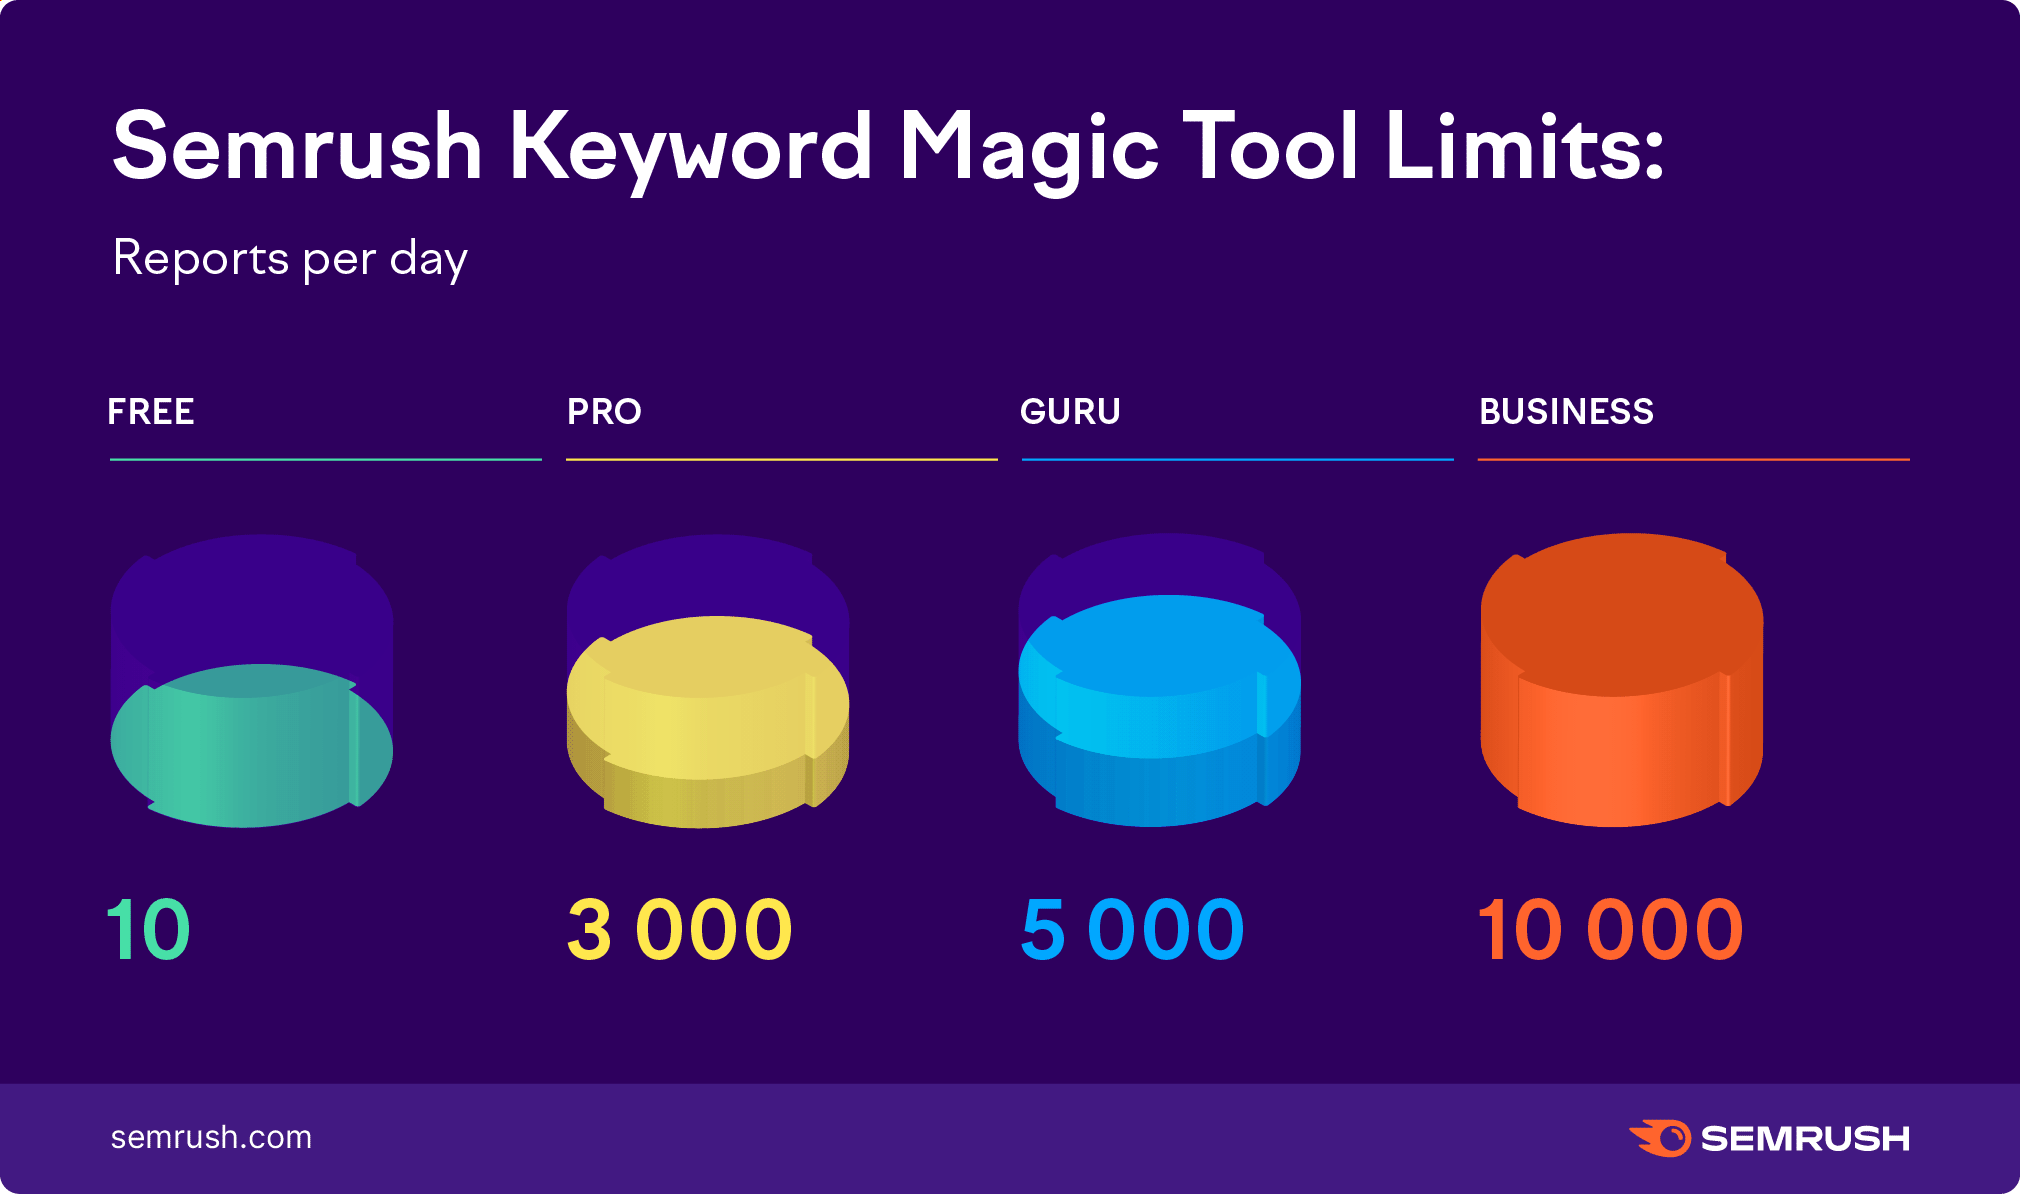 Semrush Keyword Magic Tool limits: reports per day. Free plan - 10, Pro - 3000, Guru - 5000, Business - 10000. 